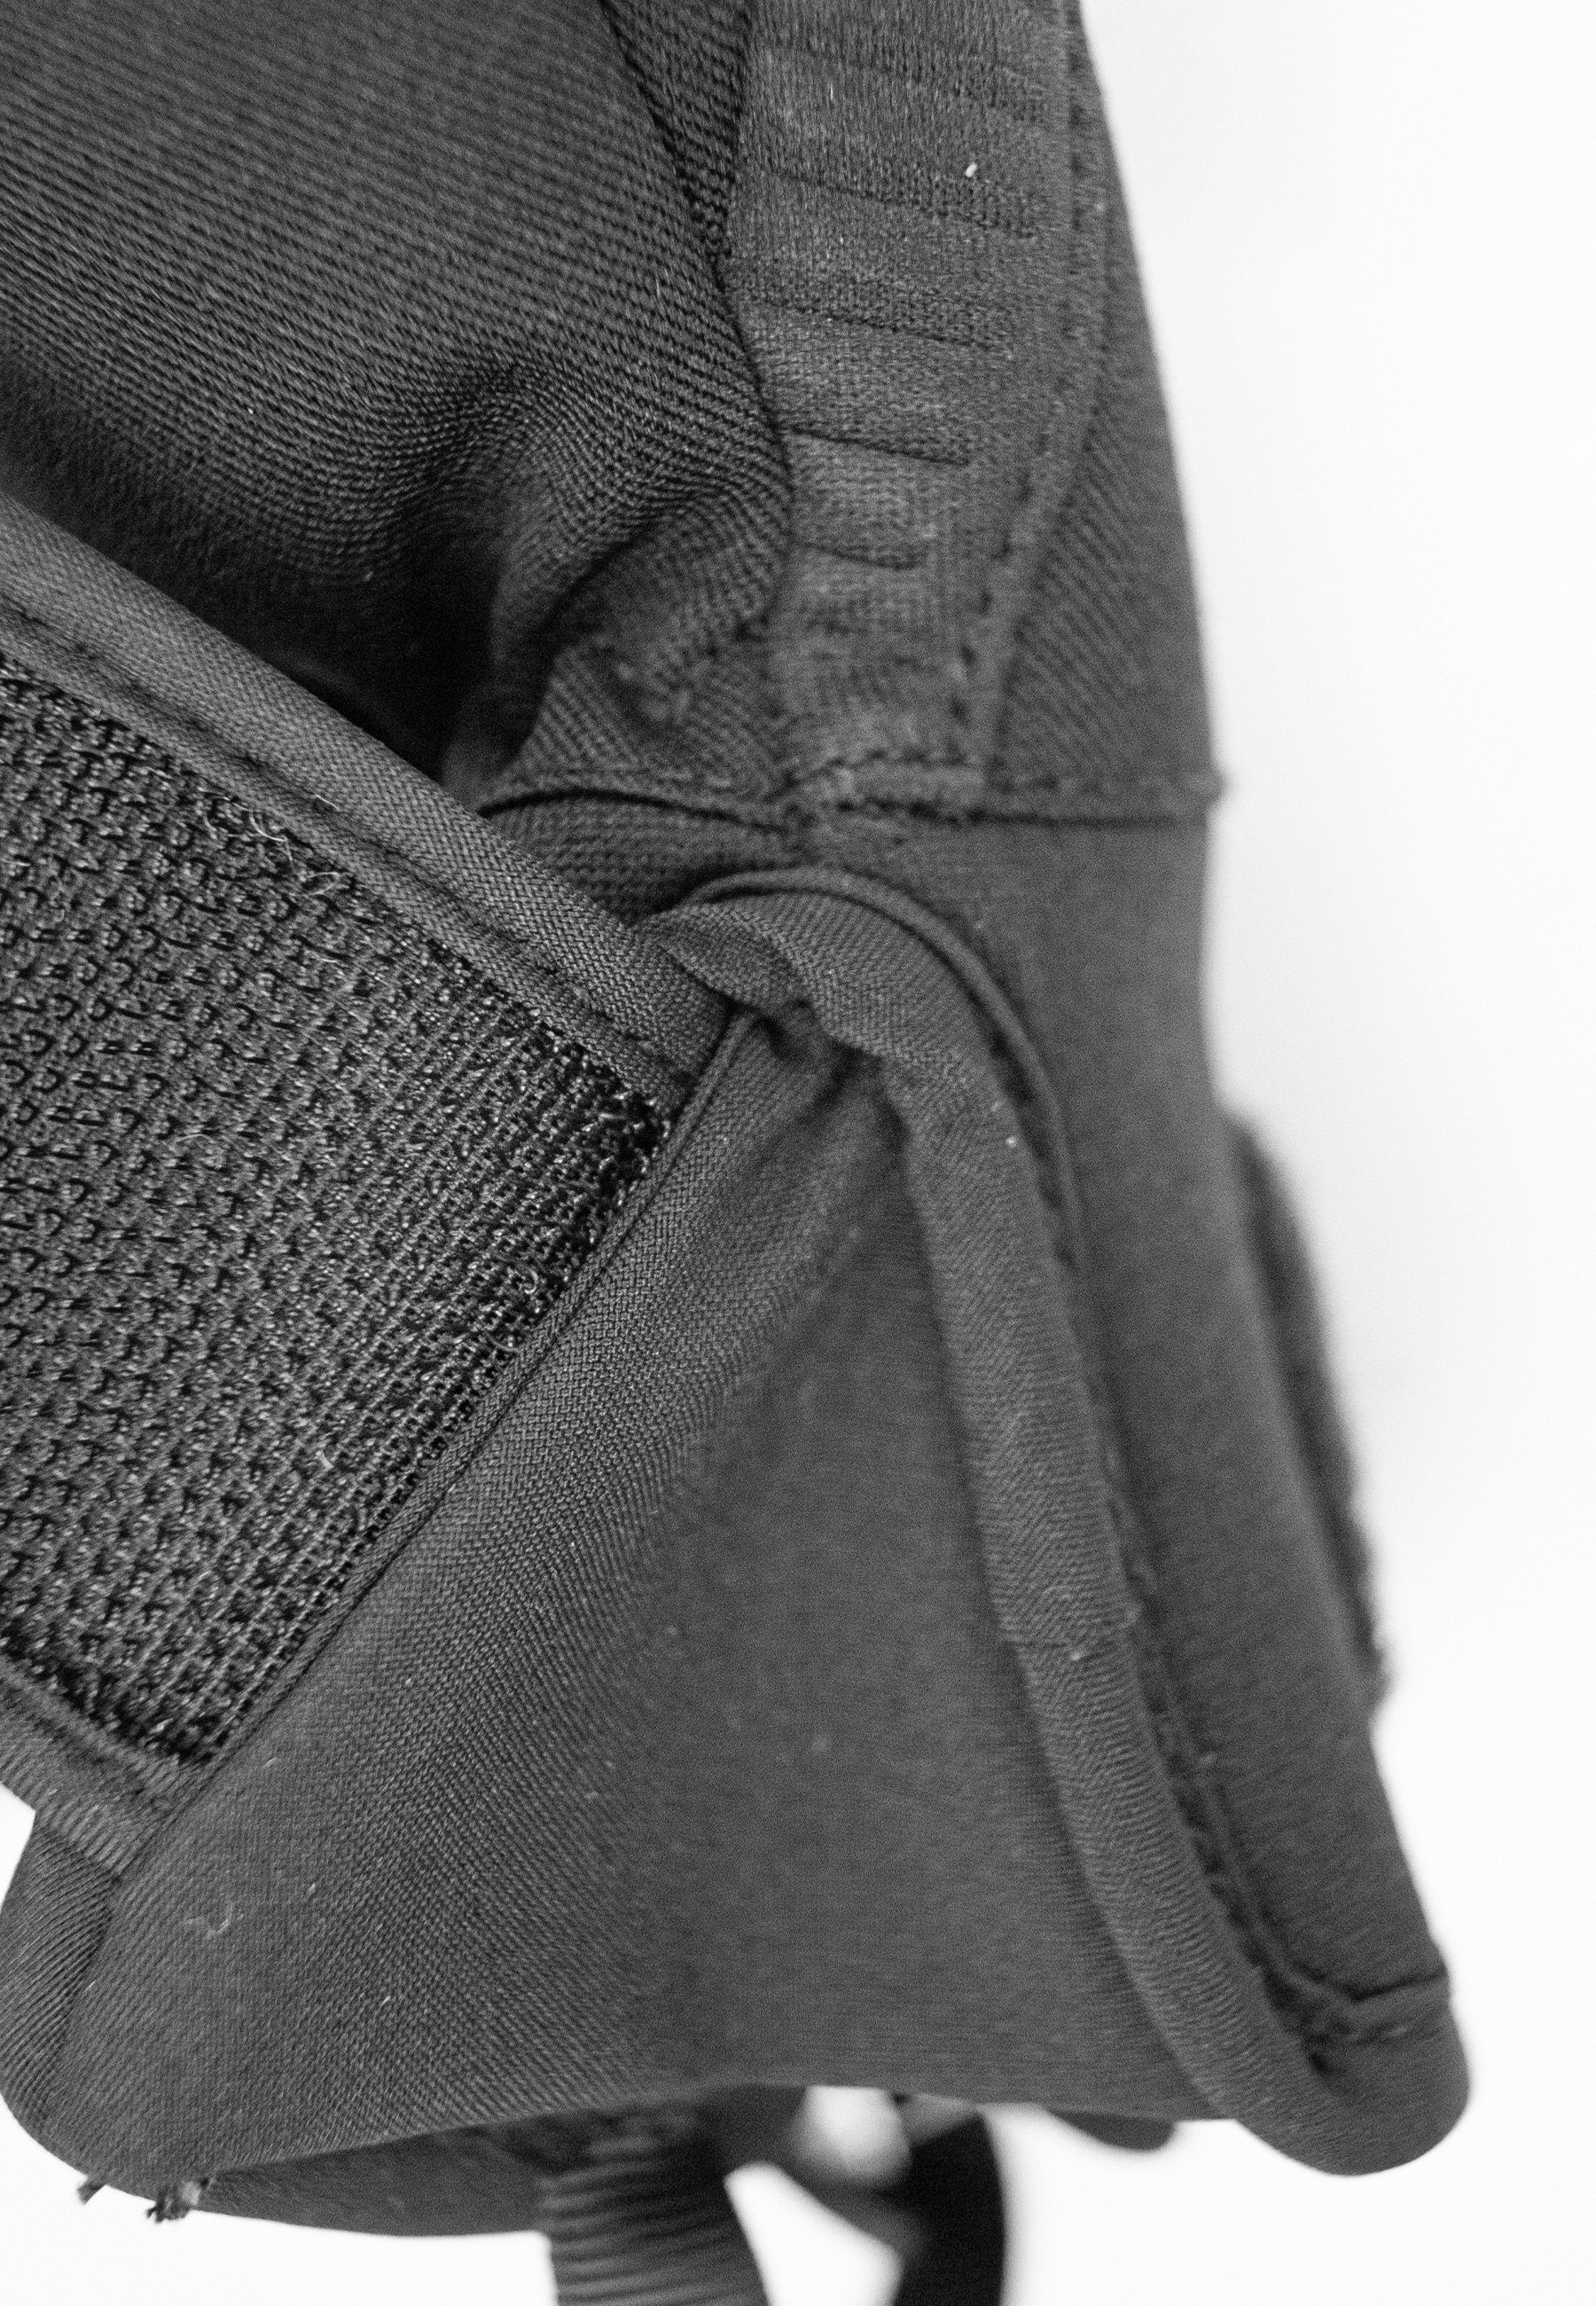 Reusch Skihandschuhe Venom aus wasserdichtem XT Material atmungsaktivem R-TEX® schwarz-schwarz und